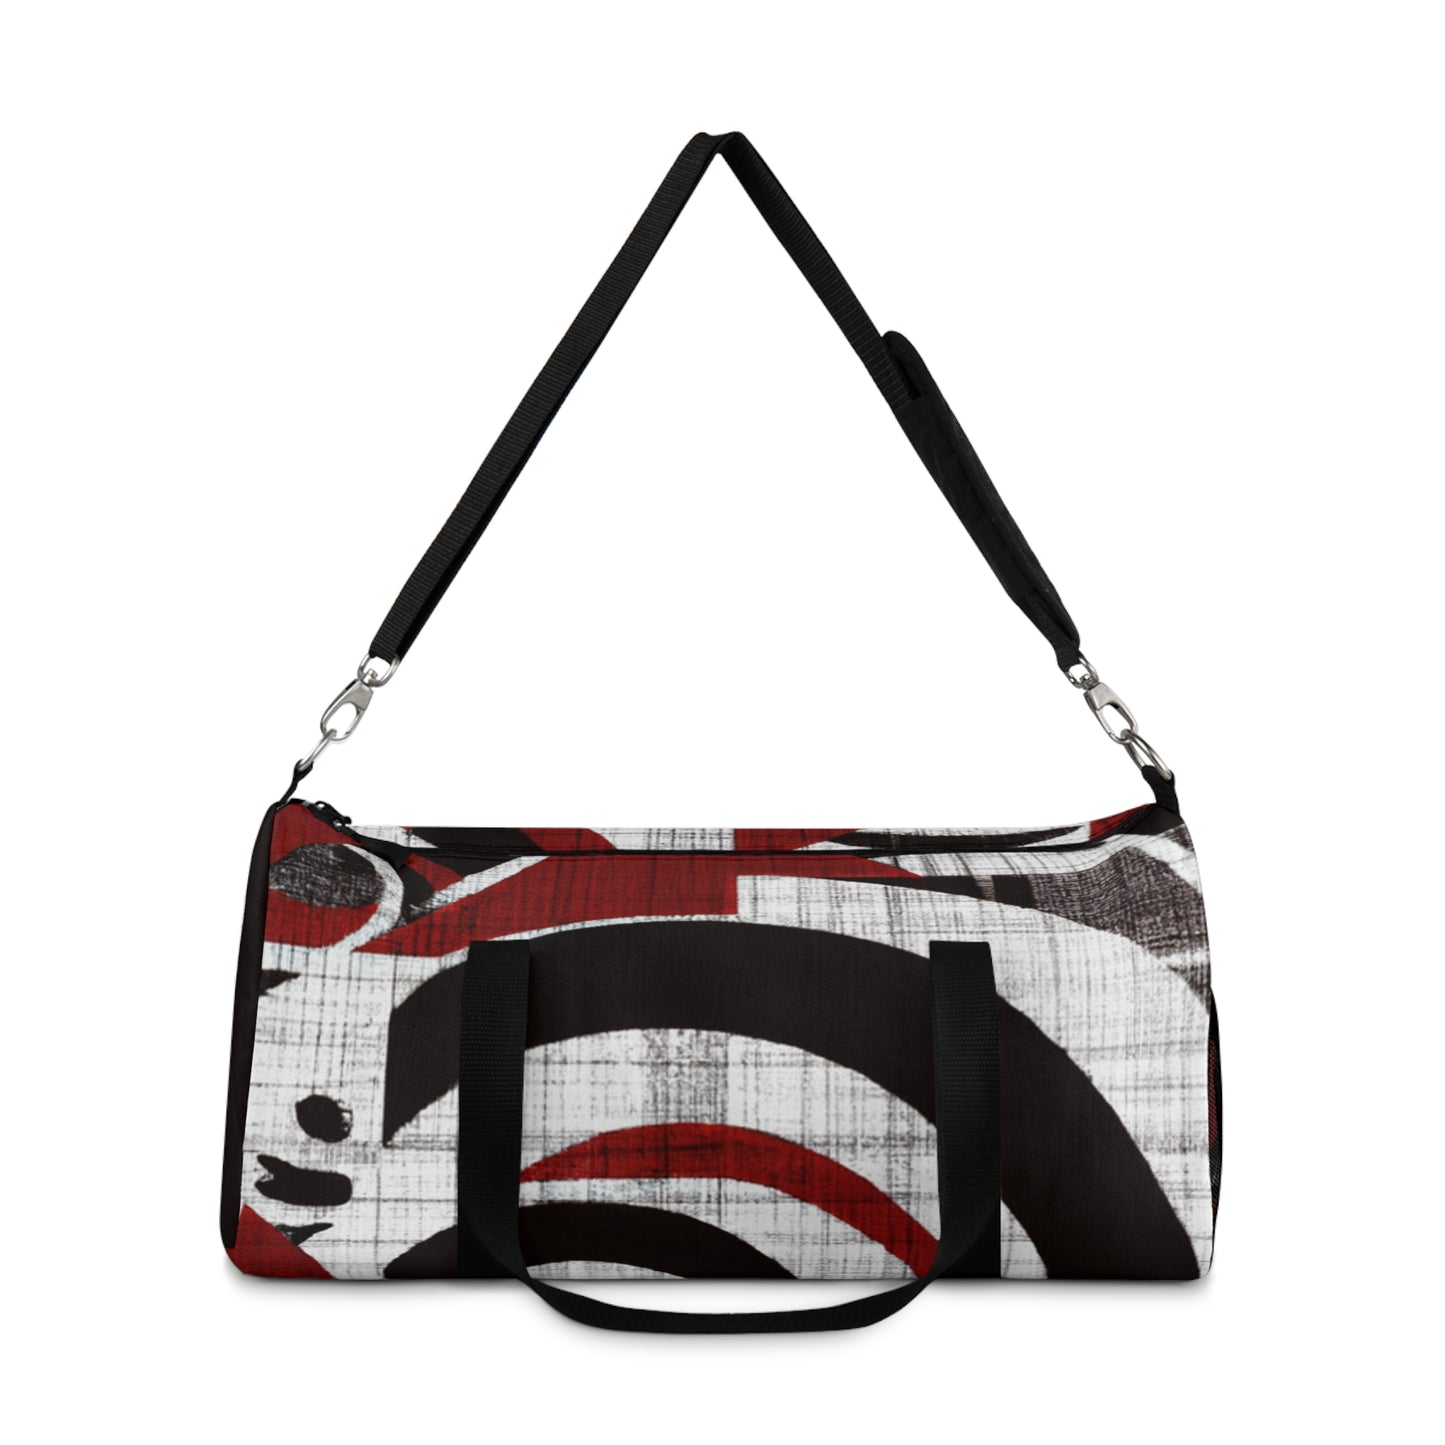 Theophile Chatard - Geometric Pattern Duffel Travel Gym Luggage Bag